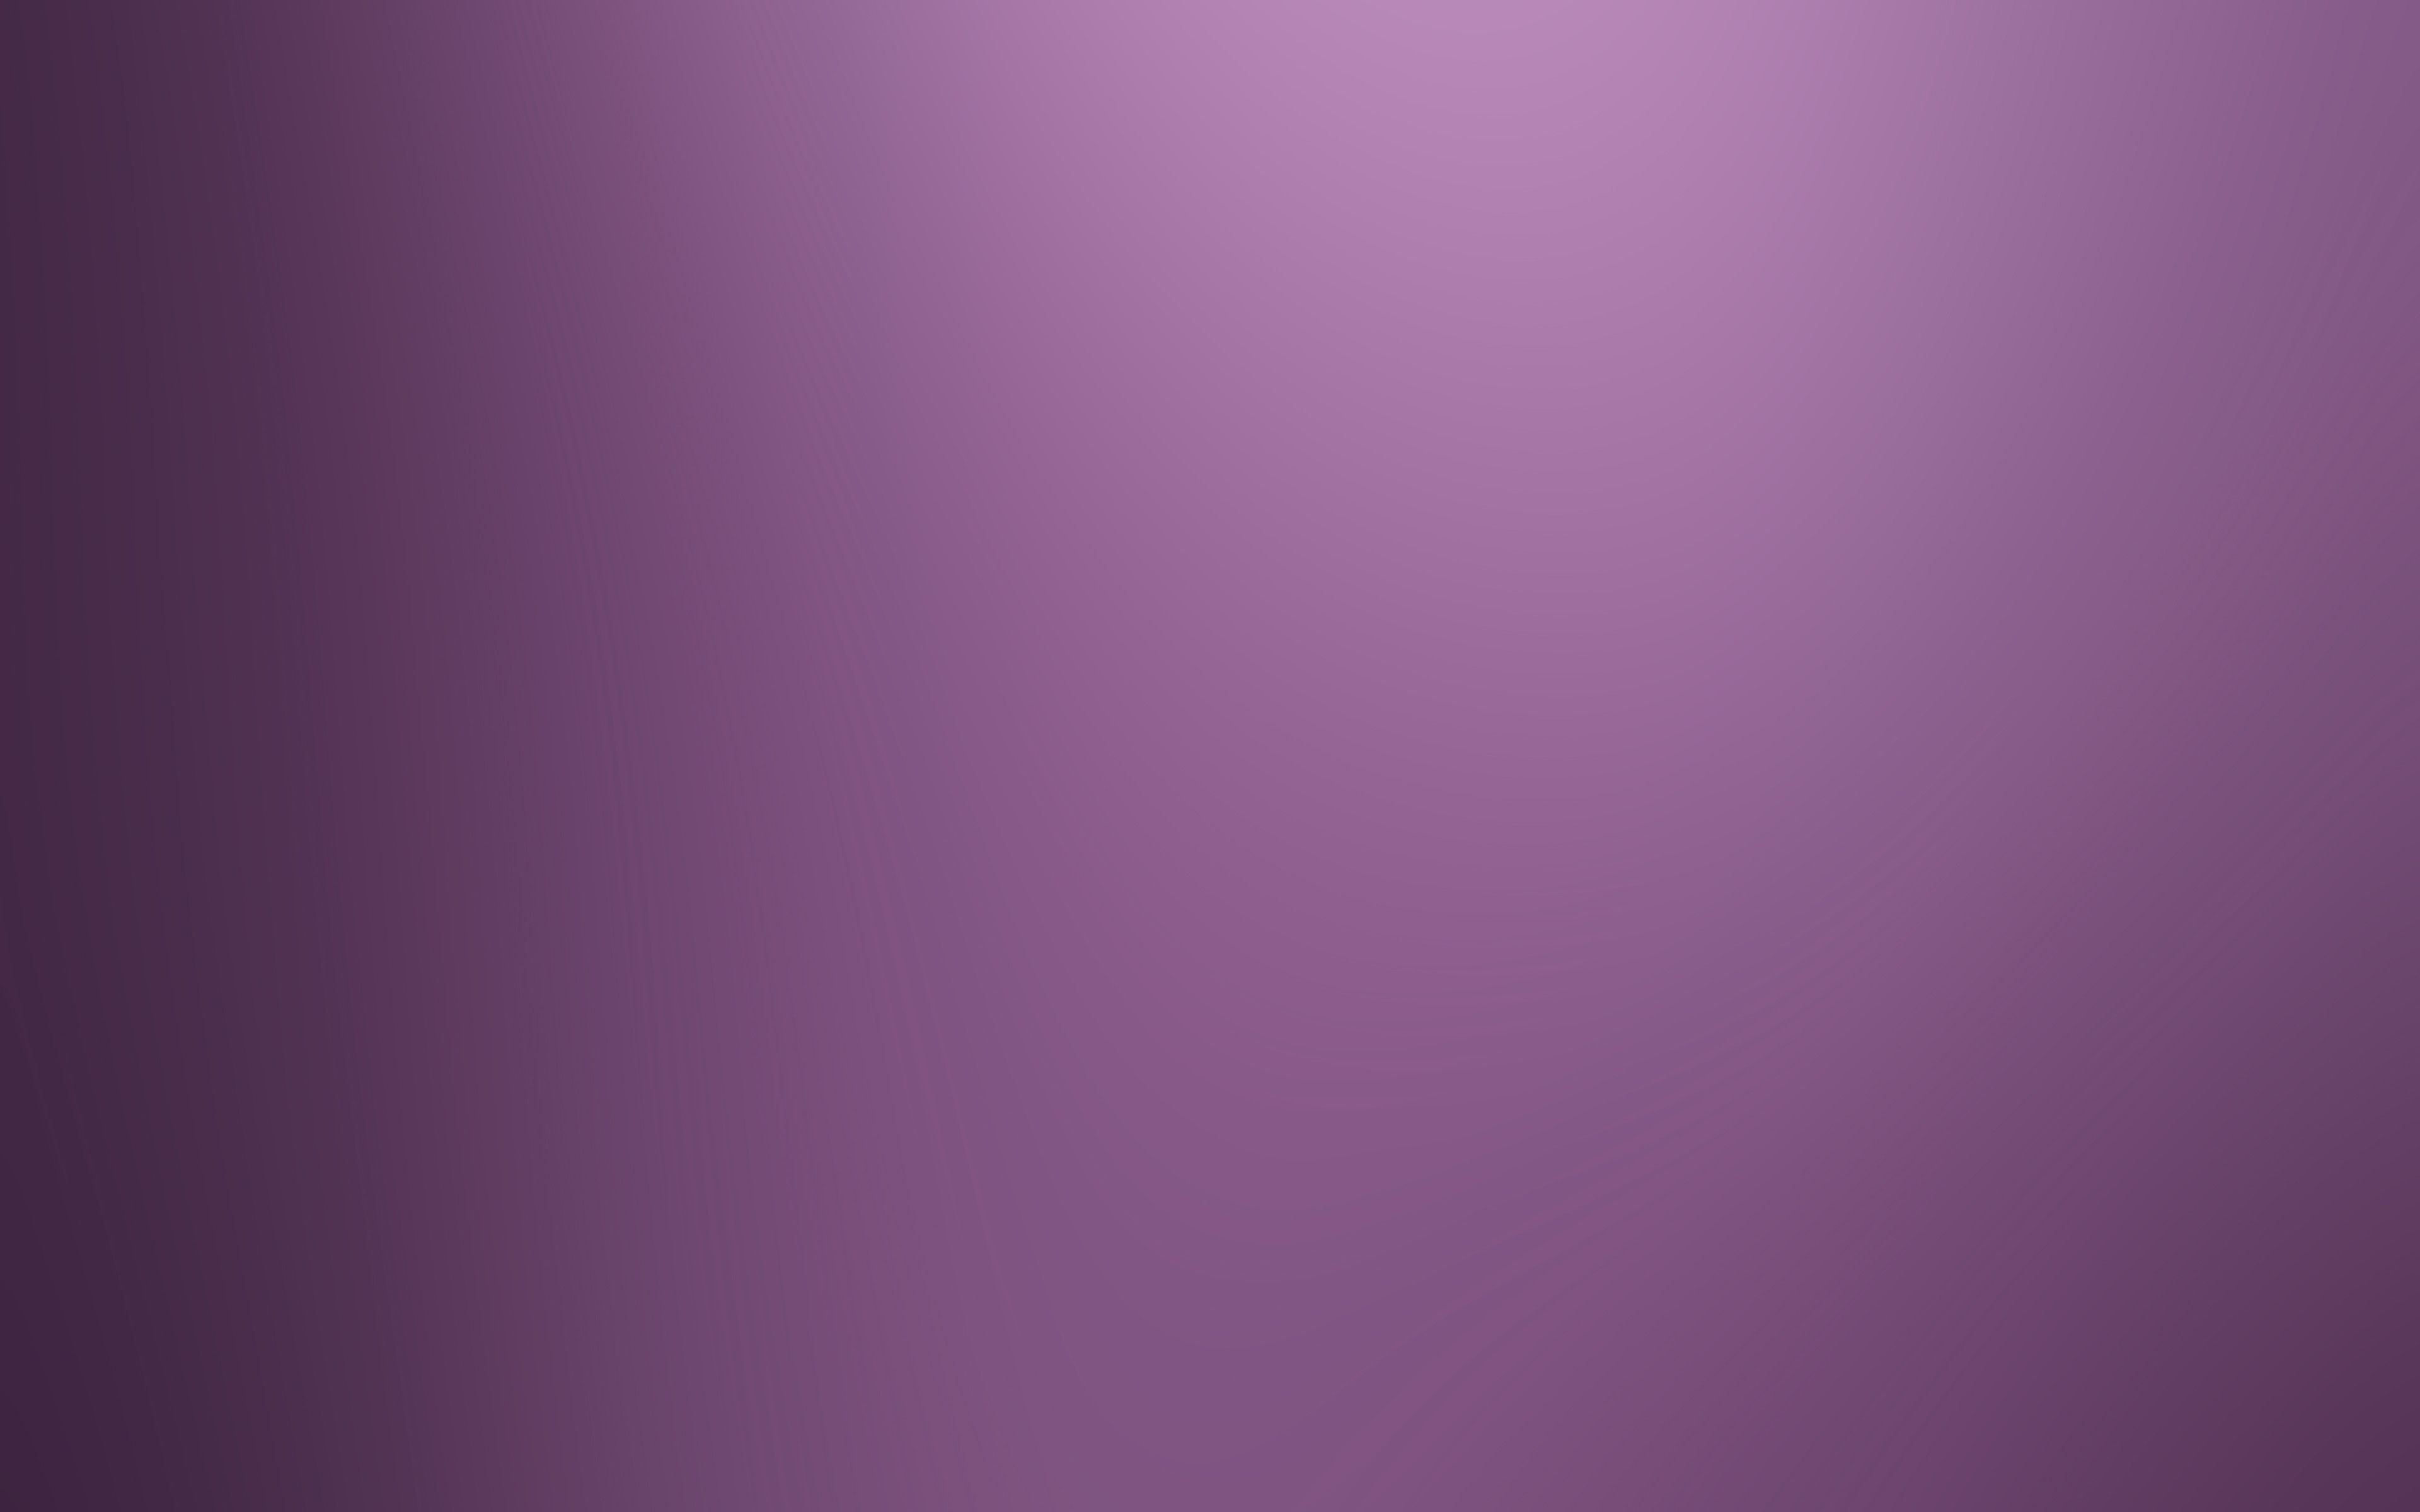 wallpaper for desktop, laptop. purple solid gradation blur